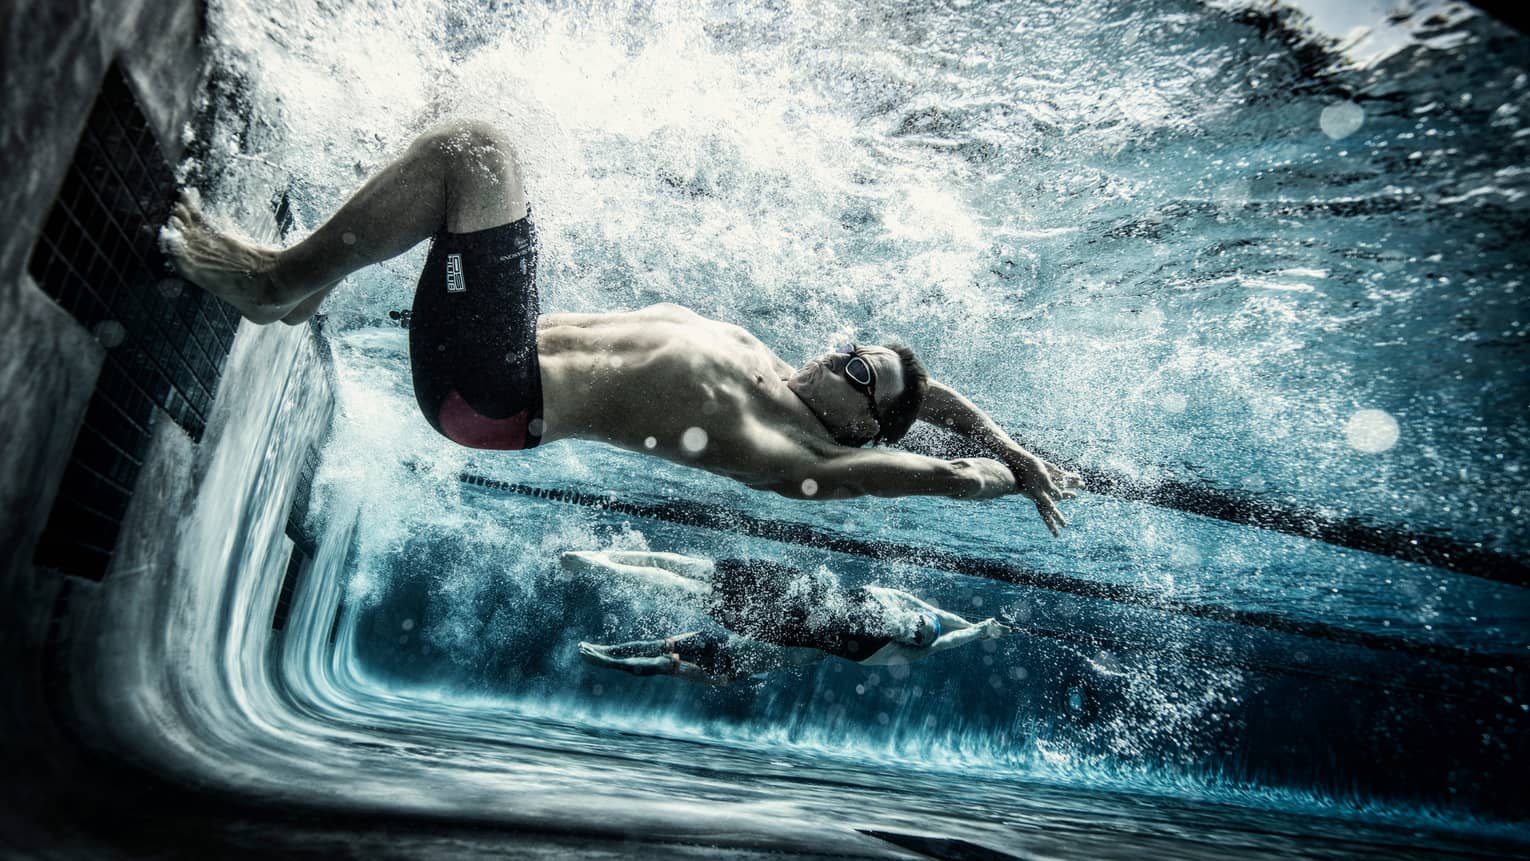 Dave Scott Triathlon camp swimmer practicing underwater in the lap pool